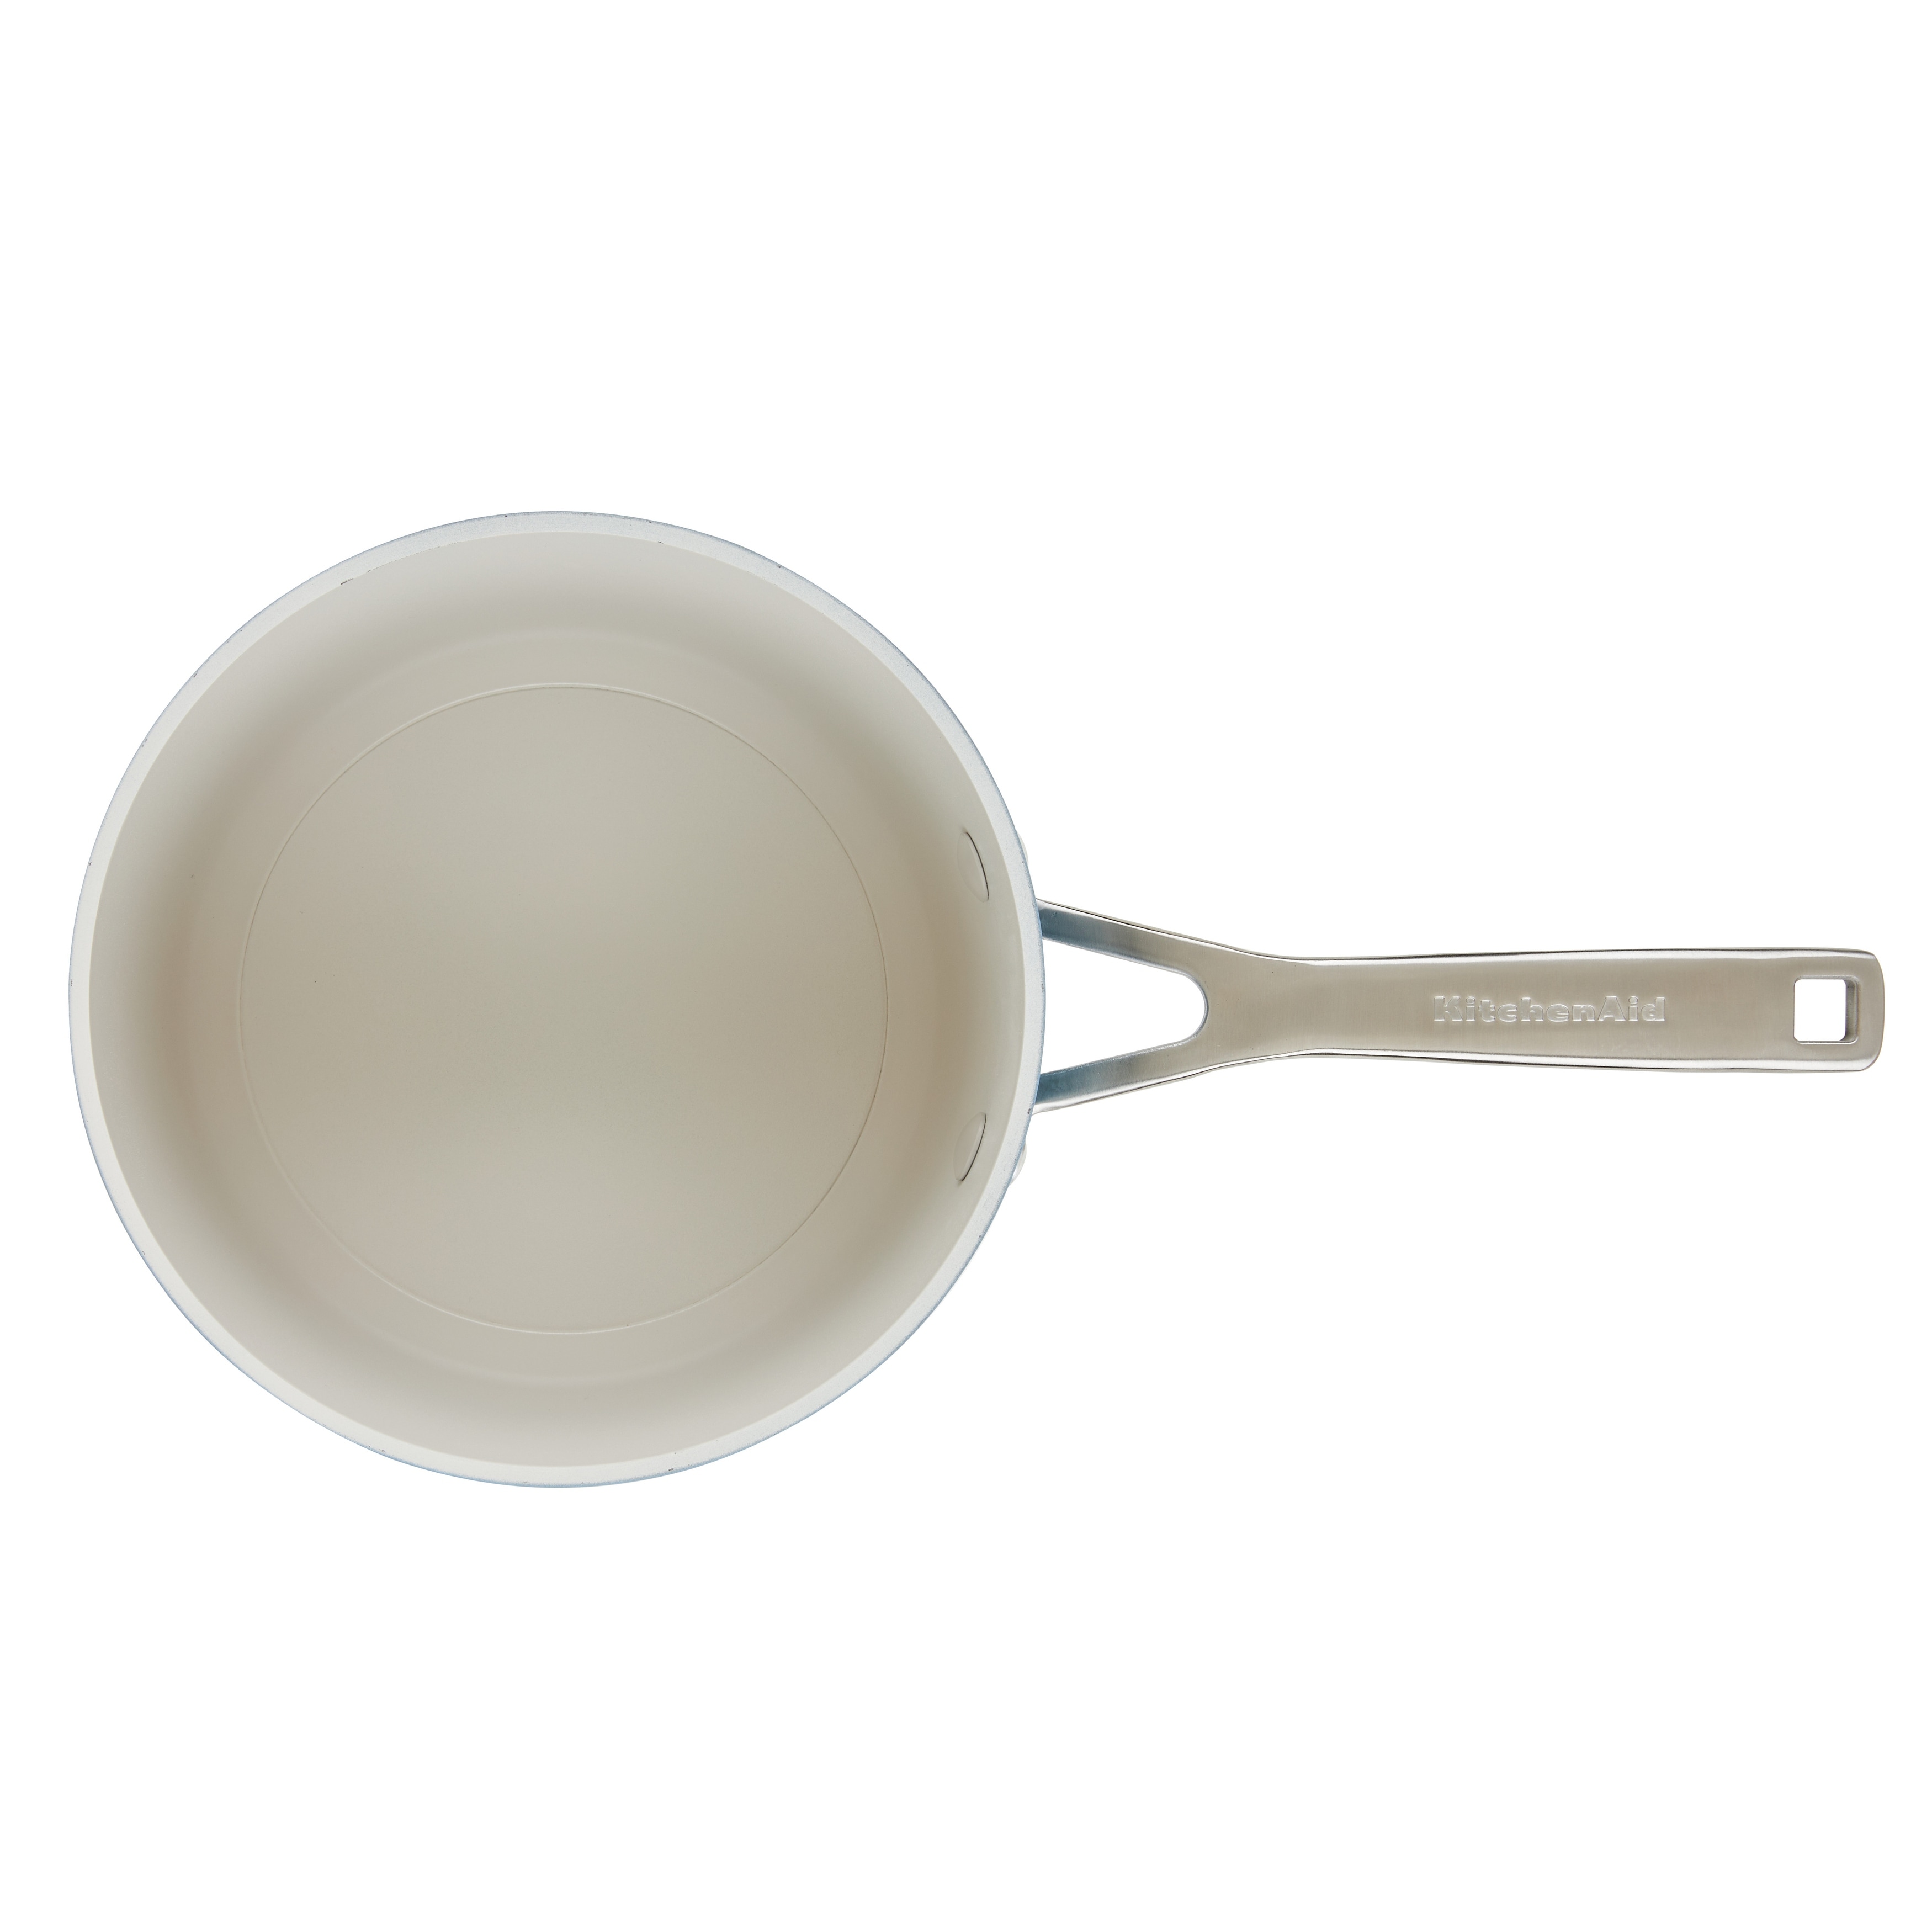 KitchenAid 3-Quart Hard Anodized Ceramic Nonstick Sauce Pan, Pistachio